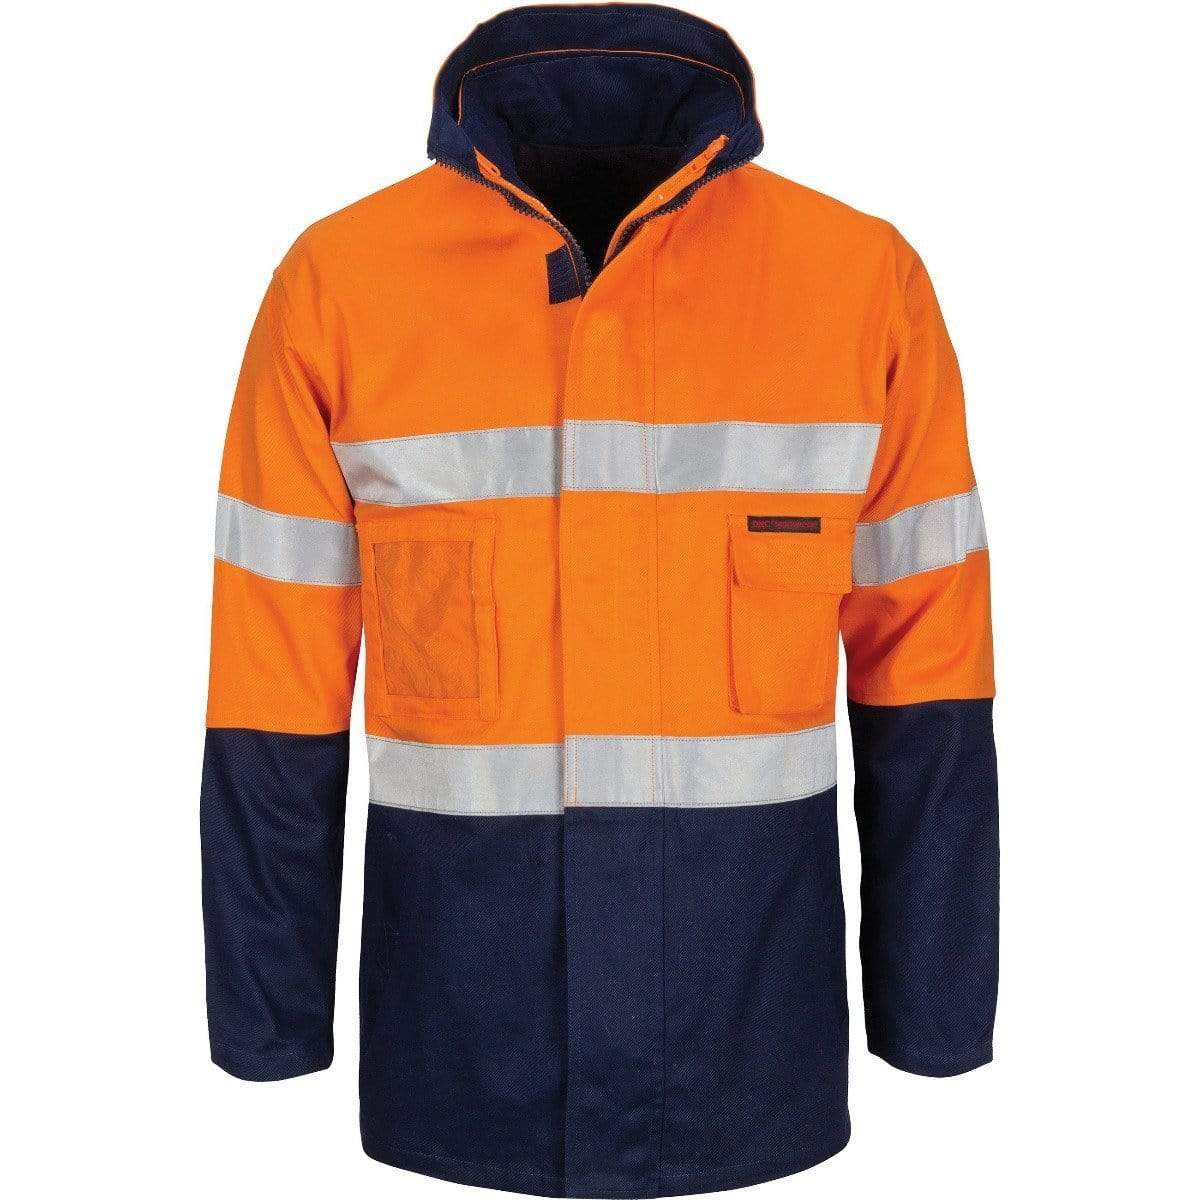 Dnc Workwear Hi-vis 4-in-1 Cotton Drill Jacket With Generic Reflective Tape - 3764 Work Wear DNC Workwear Orange/Navy XS 